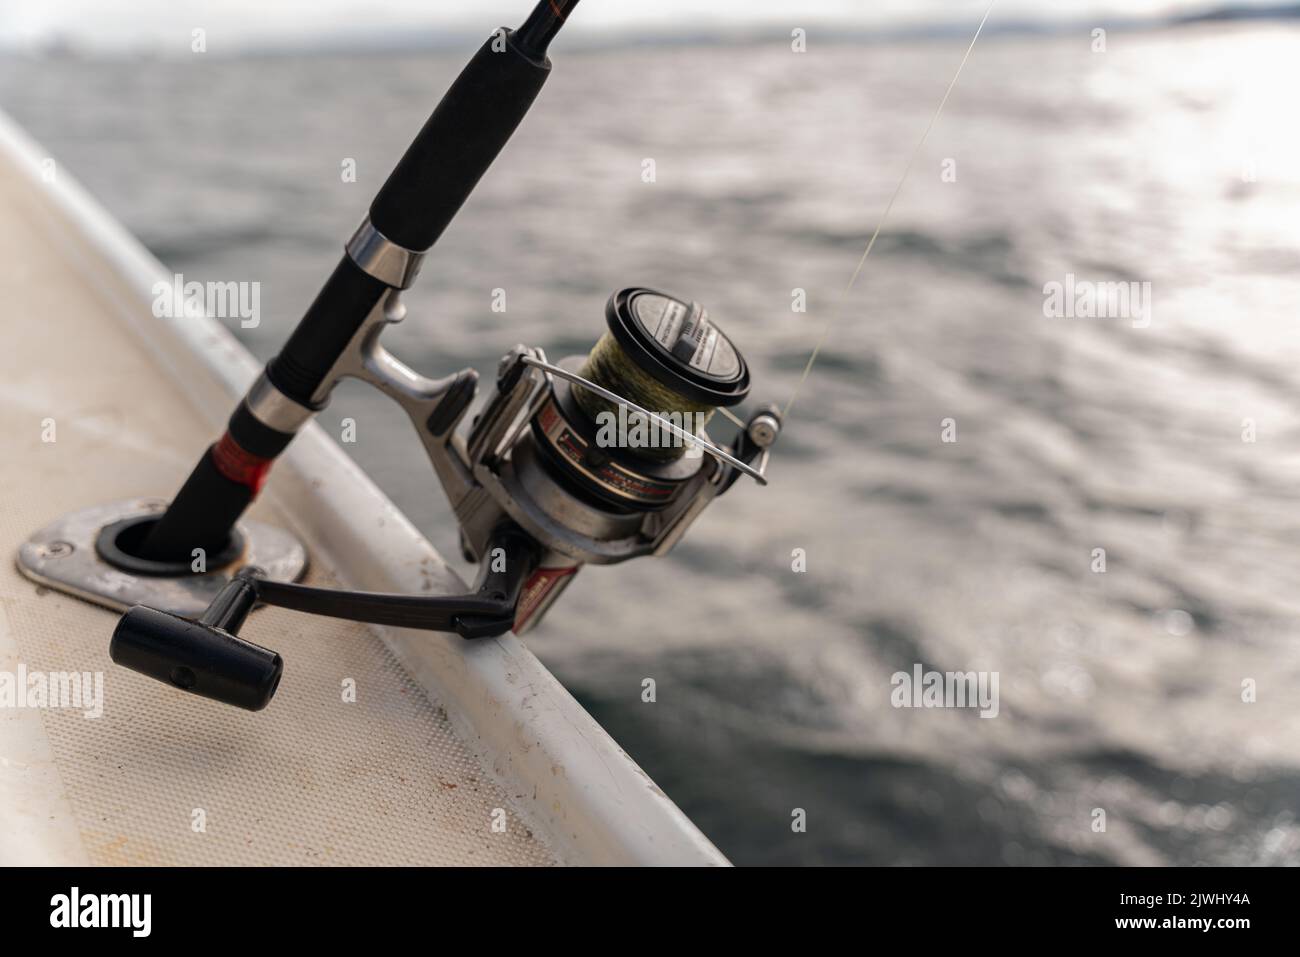 Hawaii, closeup of fishing rods & reels on a boat deep sea fishing C1376 -  SuperStock